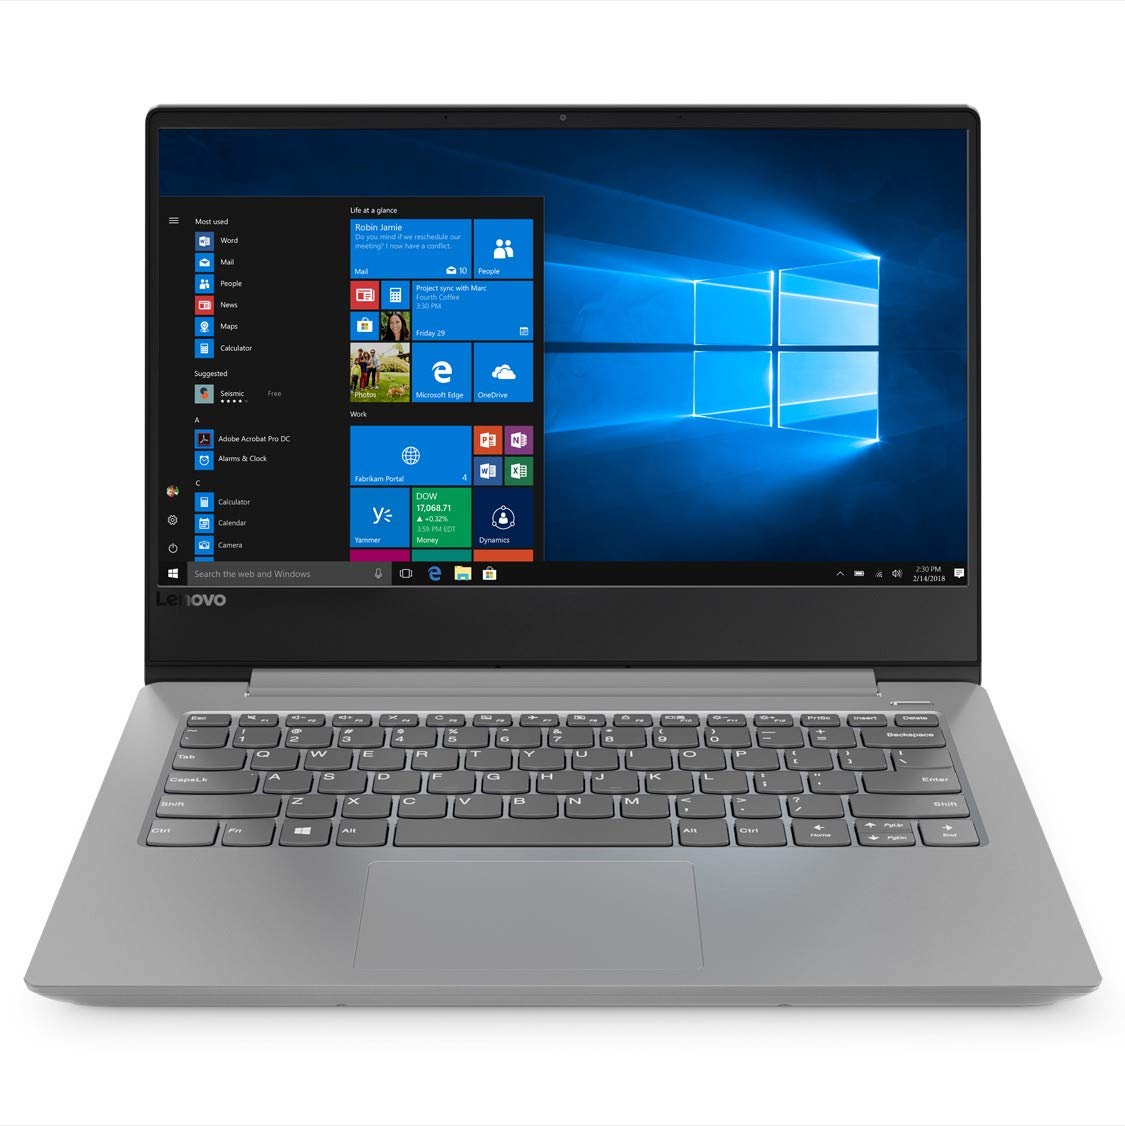 Lenovo Ideapad 330s 81F401FVIN 14-inch Laptop (8th Gen Core i3-8130U/4GB/1TB/Windows 10/Integrated Graphics), Platinum Grey